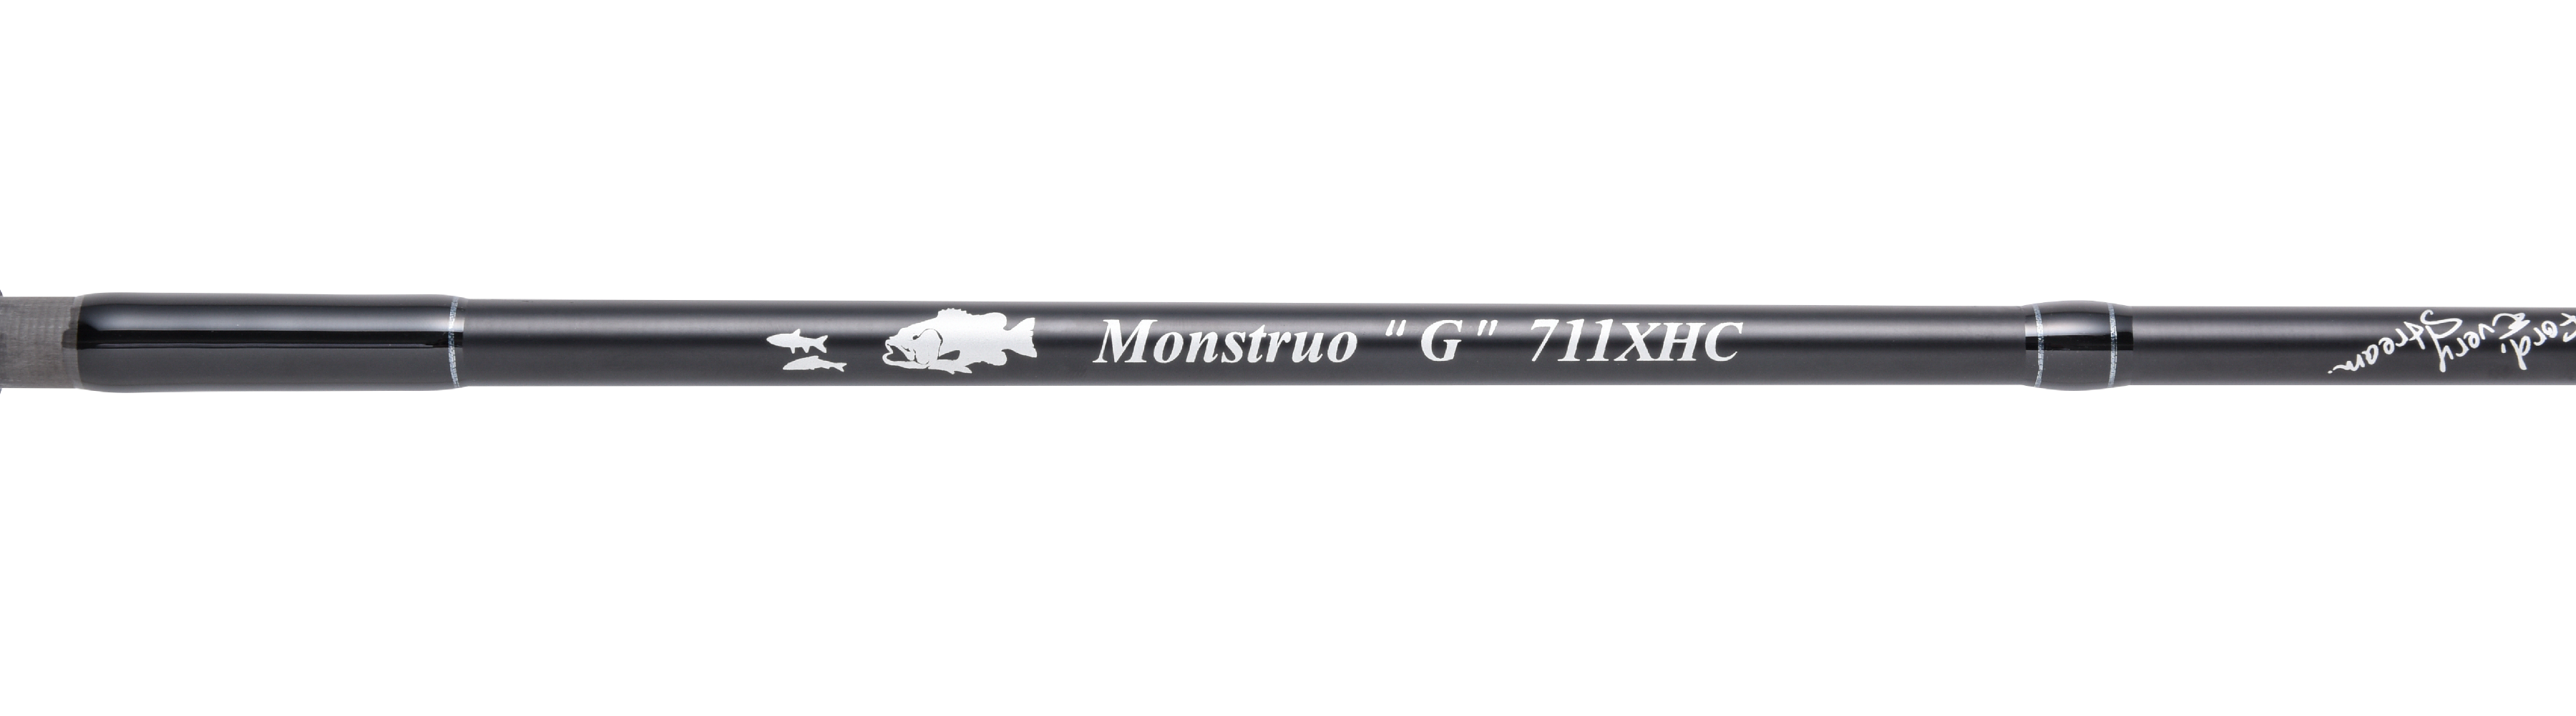 Ford every stream | » Monstruo”G” 711XHC - TULALA